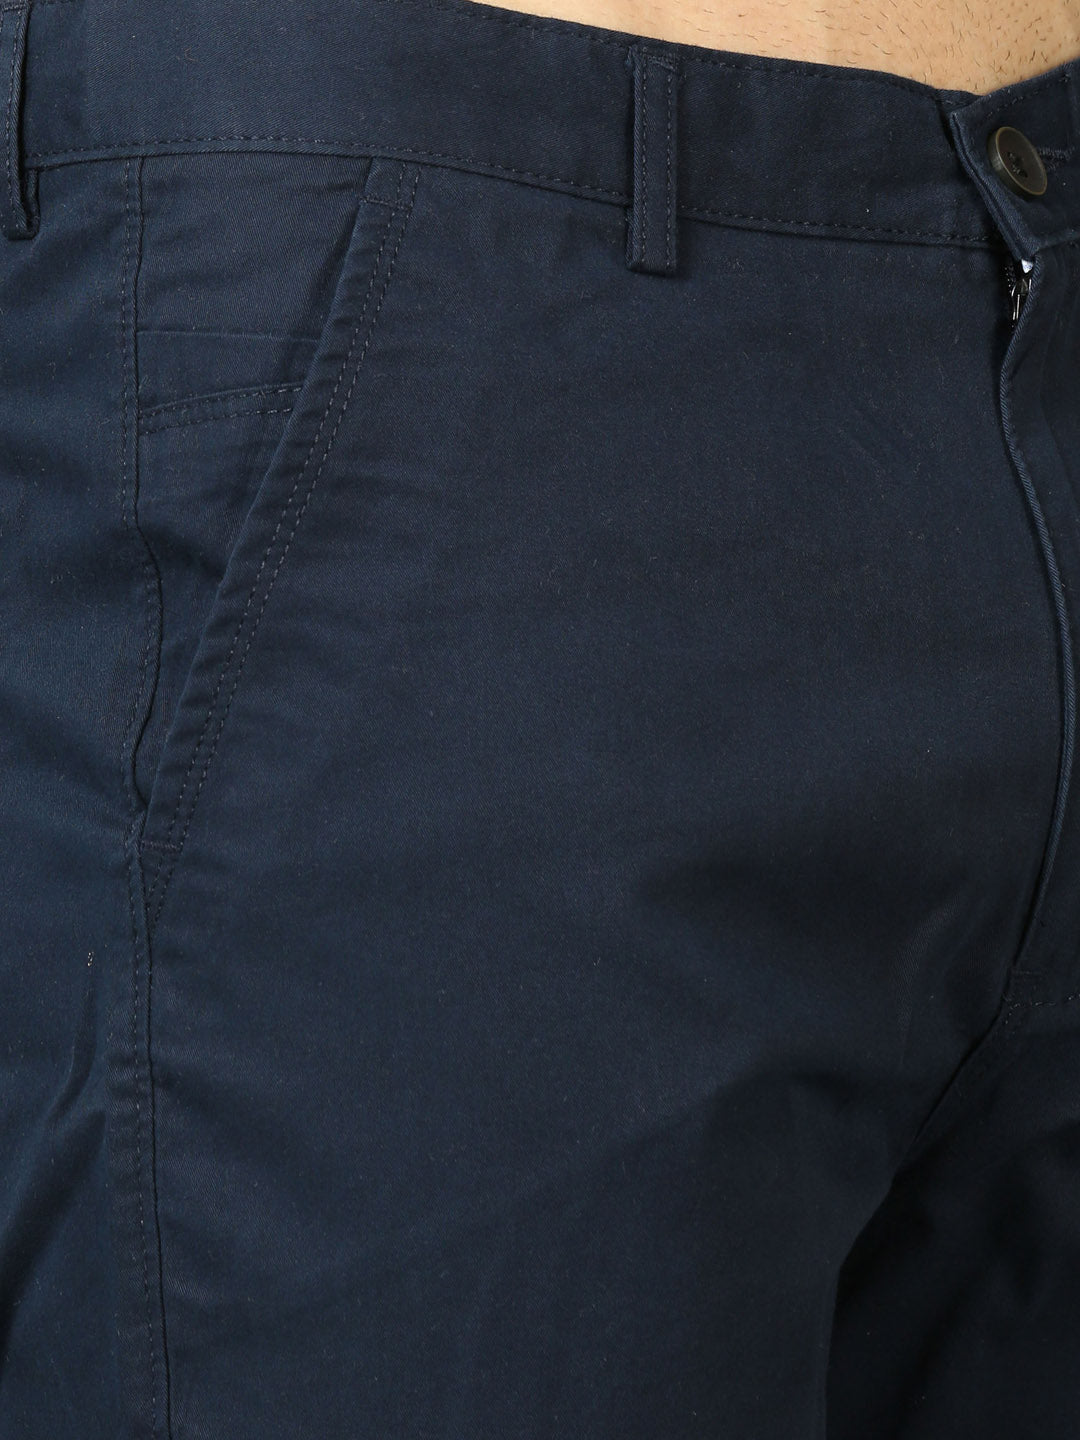 Classic Navy Blue Chino Shorts Men's Shorts Bushirt   